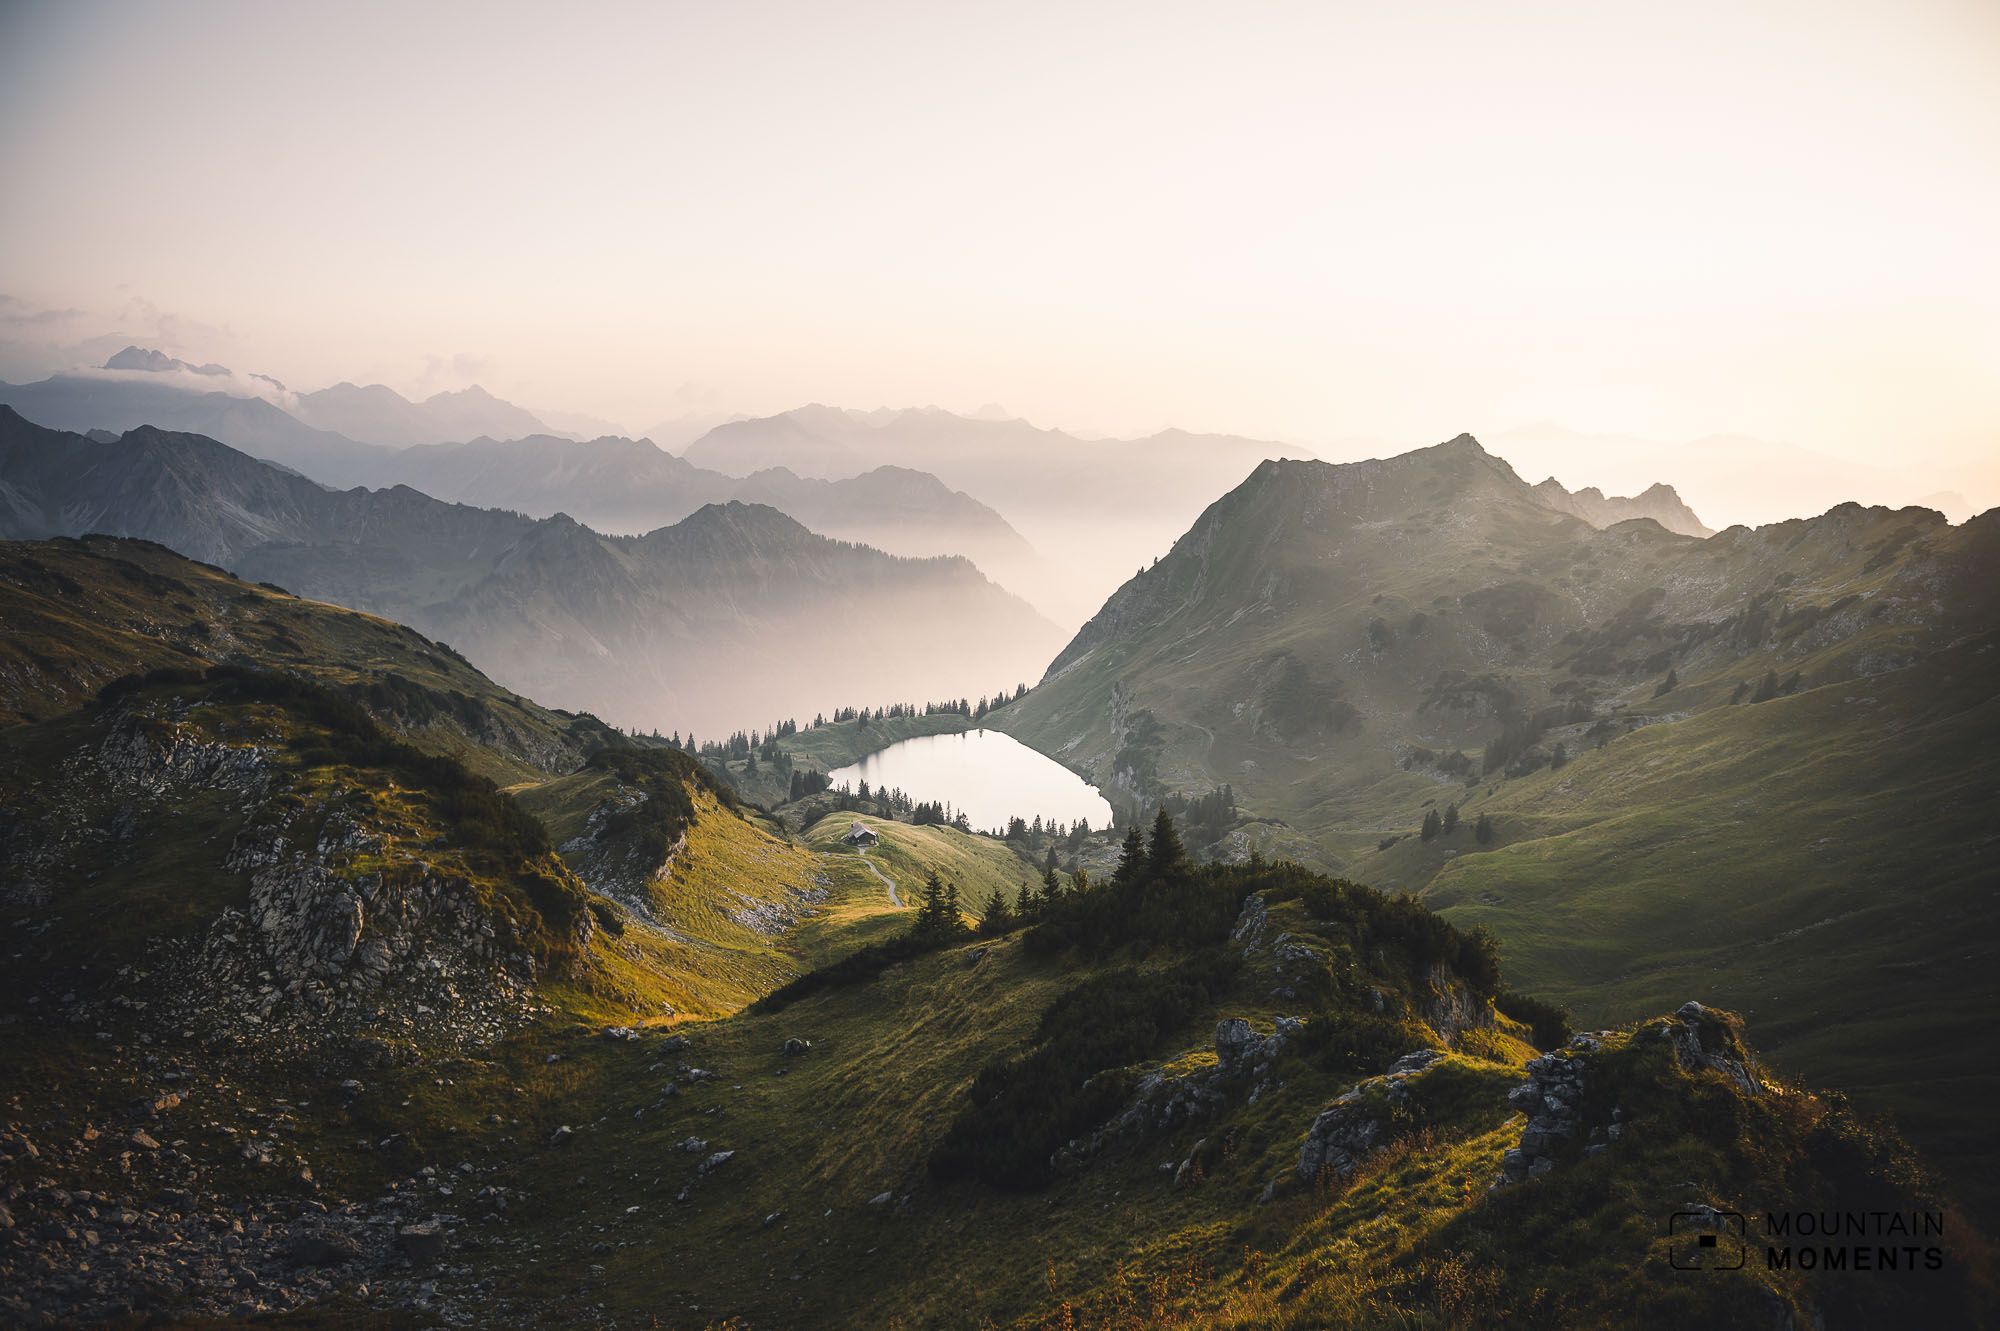 Einfache Wanderung zum Seealpsee von Nebelhorn: Das Naturjuwel in den Allgäuer Hochalpen entdecken (Alle Infos+Fototipps)